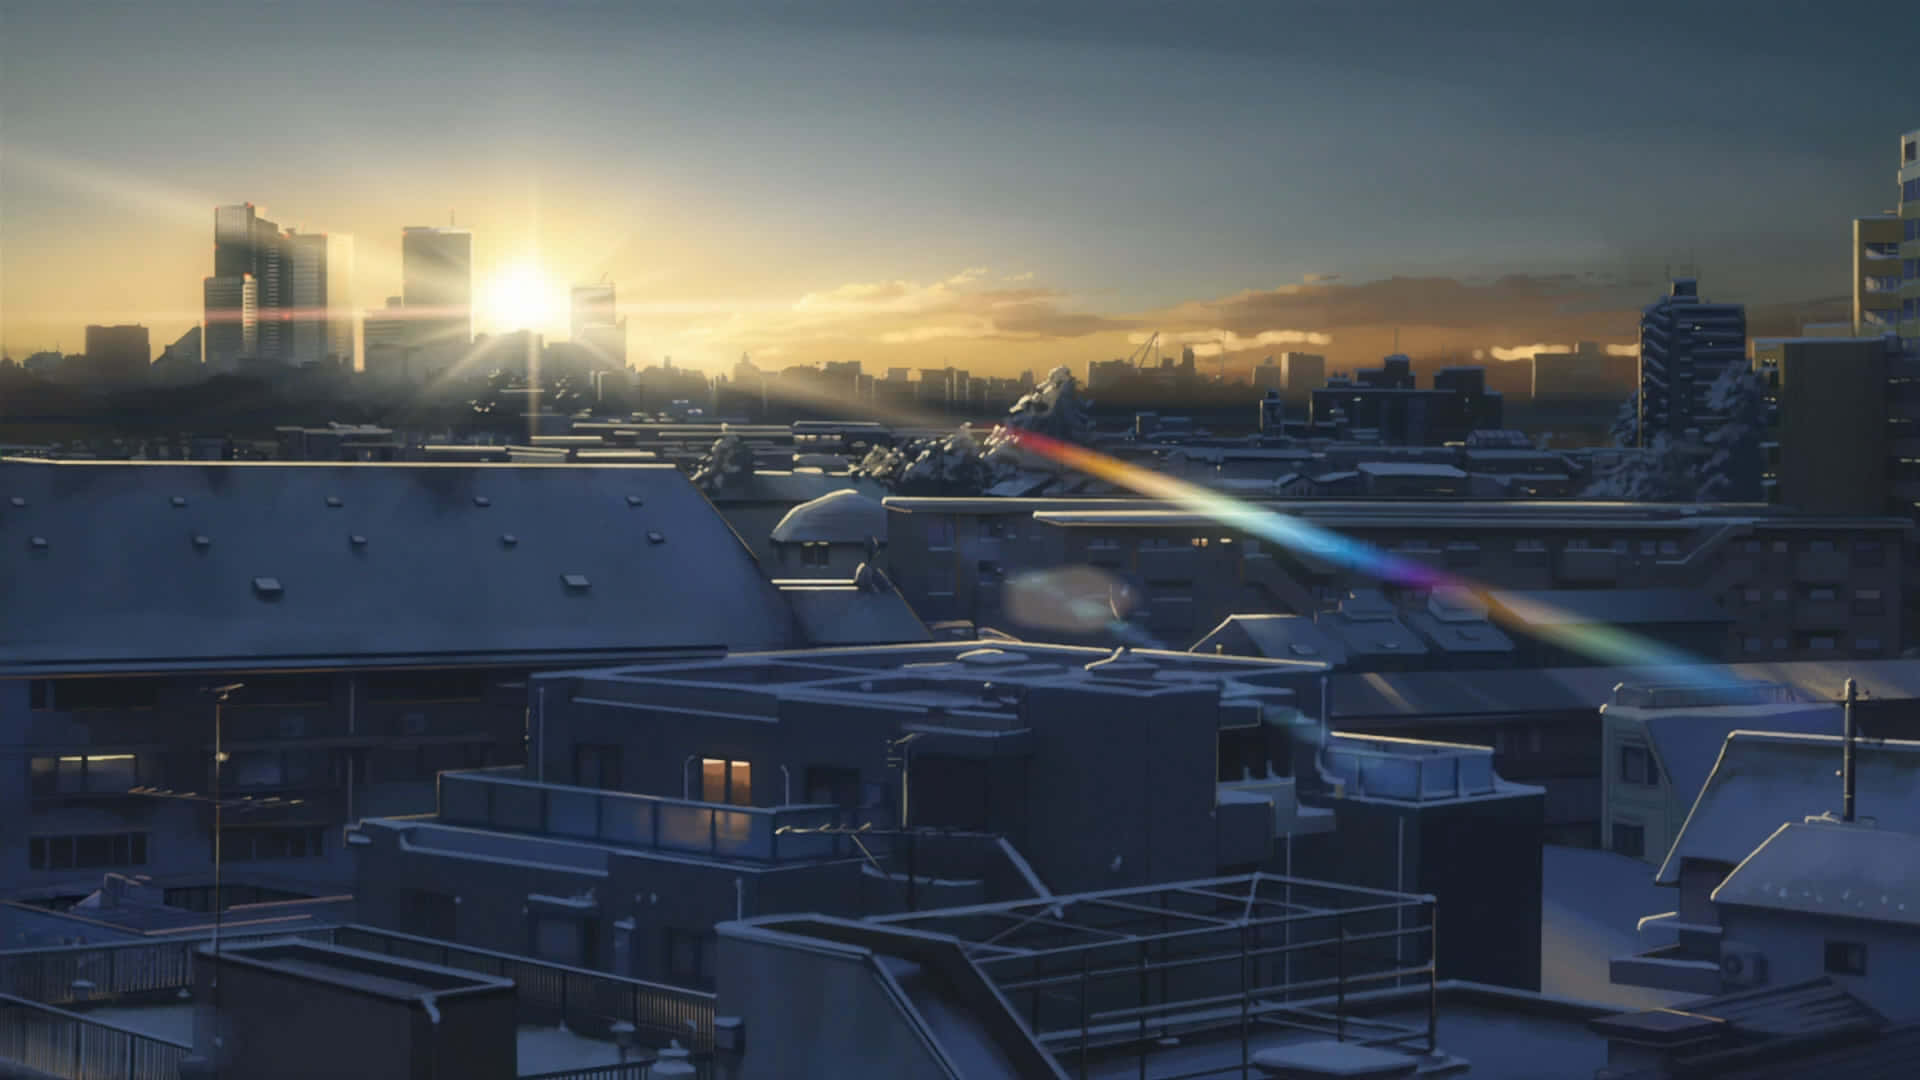 Creator of Your Name, Makoto Shinkai